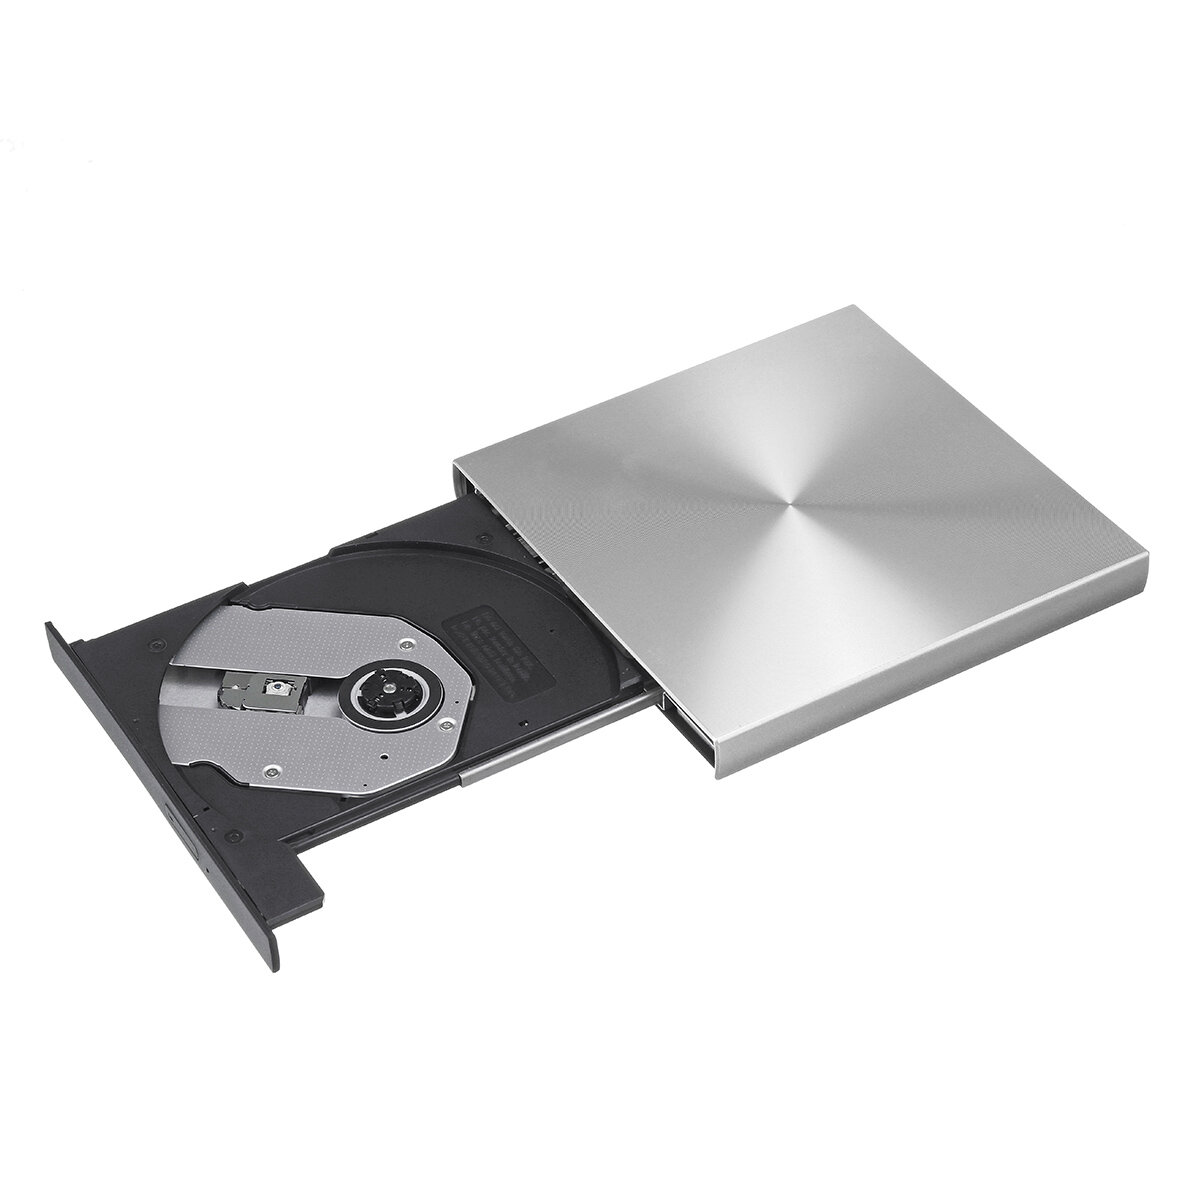 

Type-C 3.0 Slim External DVD RW CD Writer Drive Burner Reader Player Optical Drives for Macbook Laptop PC